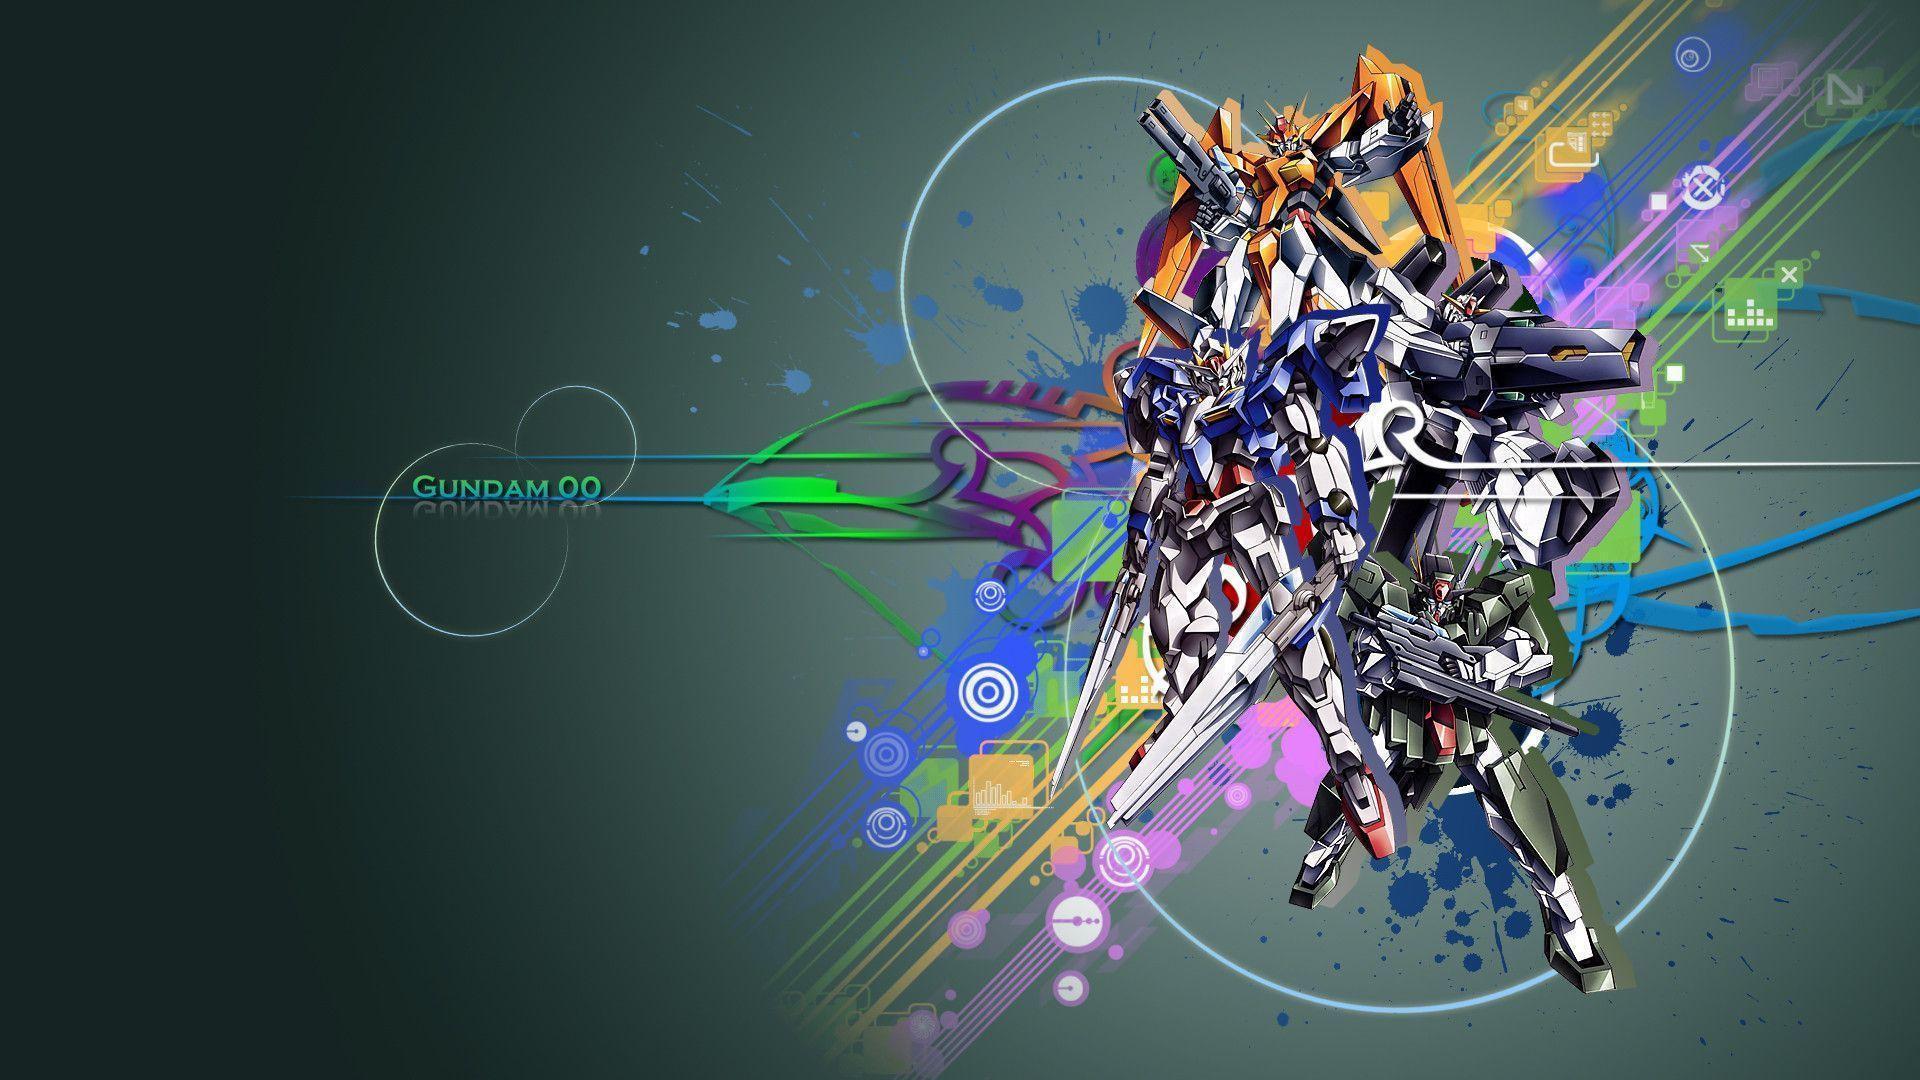 98 Gundam Wallpaper Hd Free Download For FREE - MyWeb